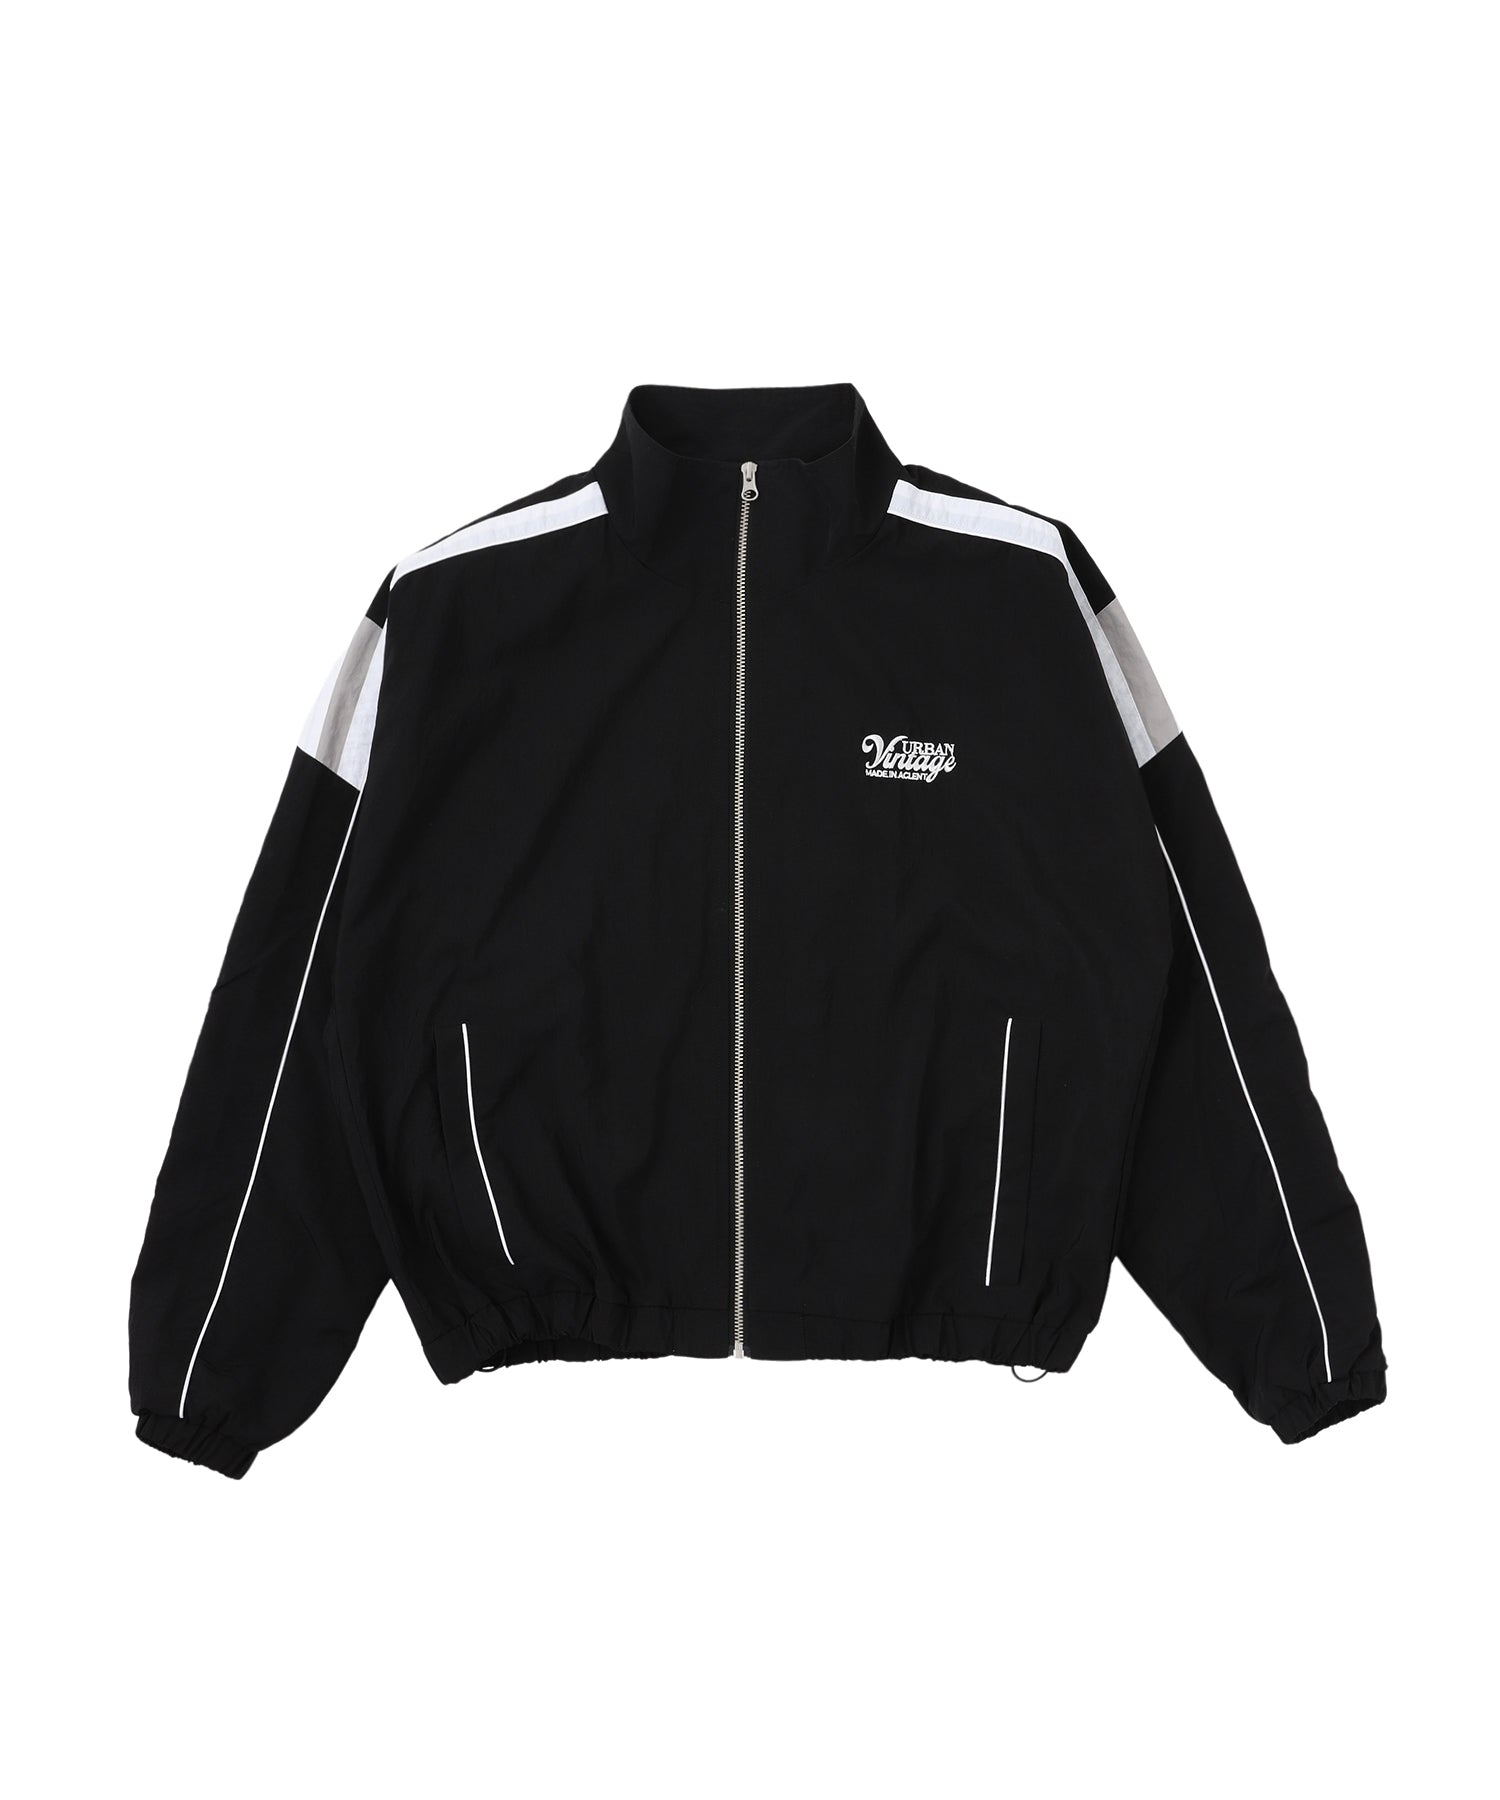 Bicolor nylon track jacket